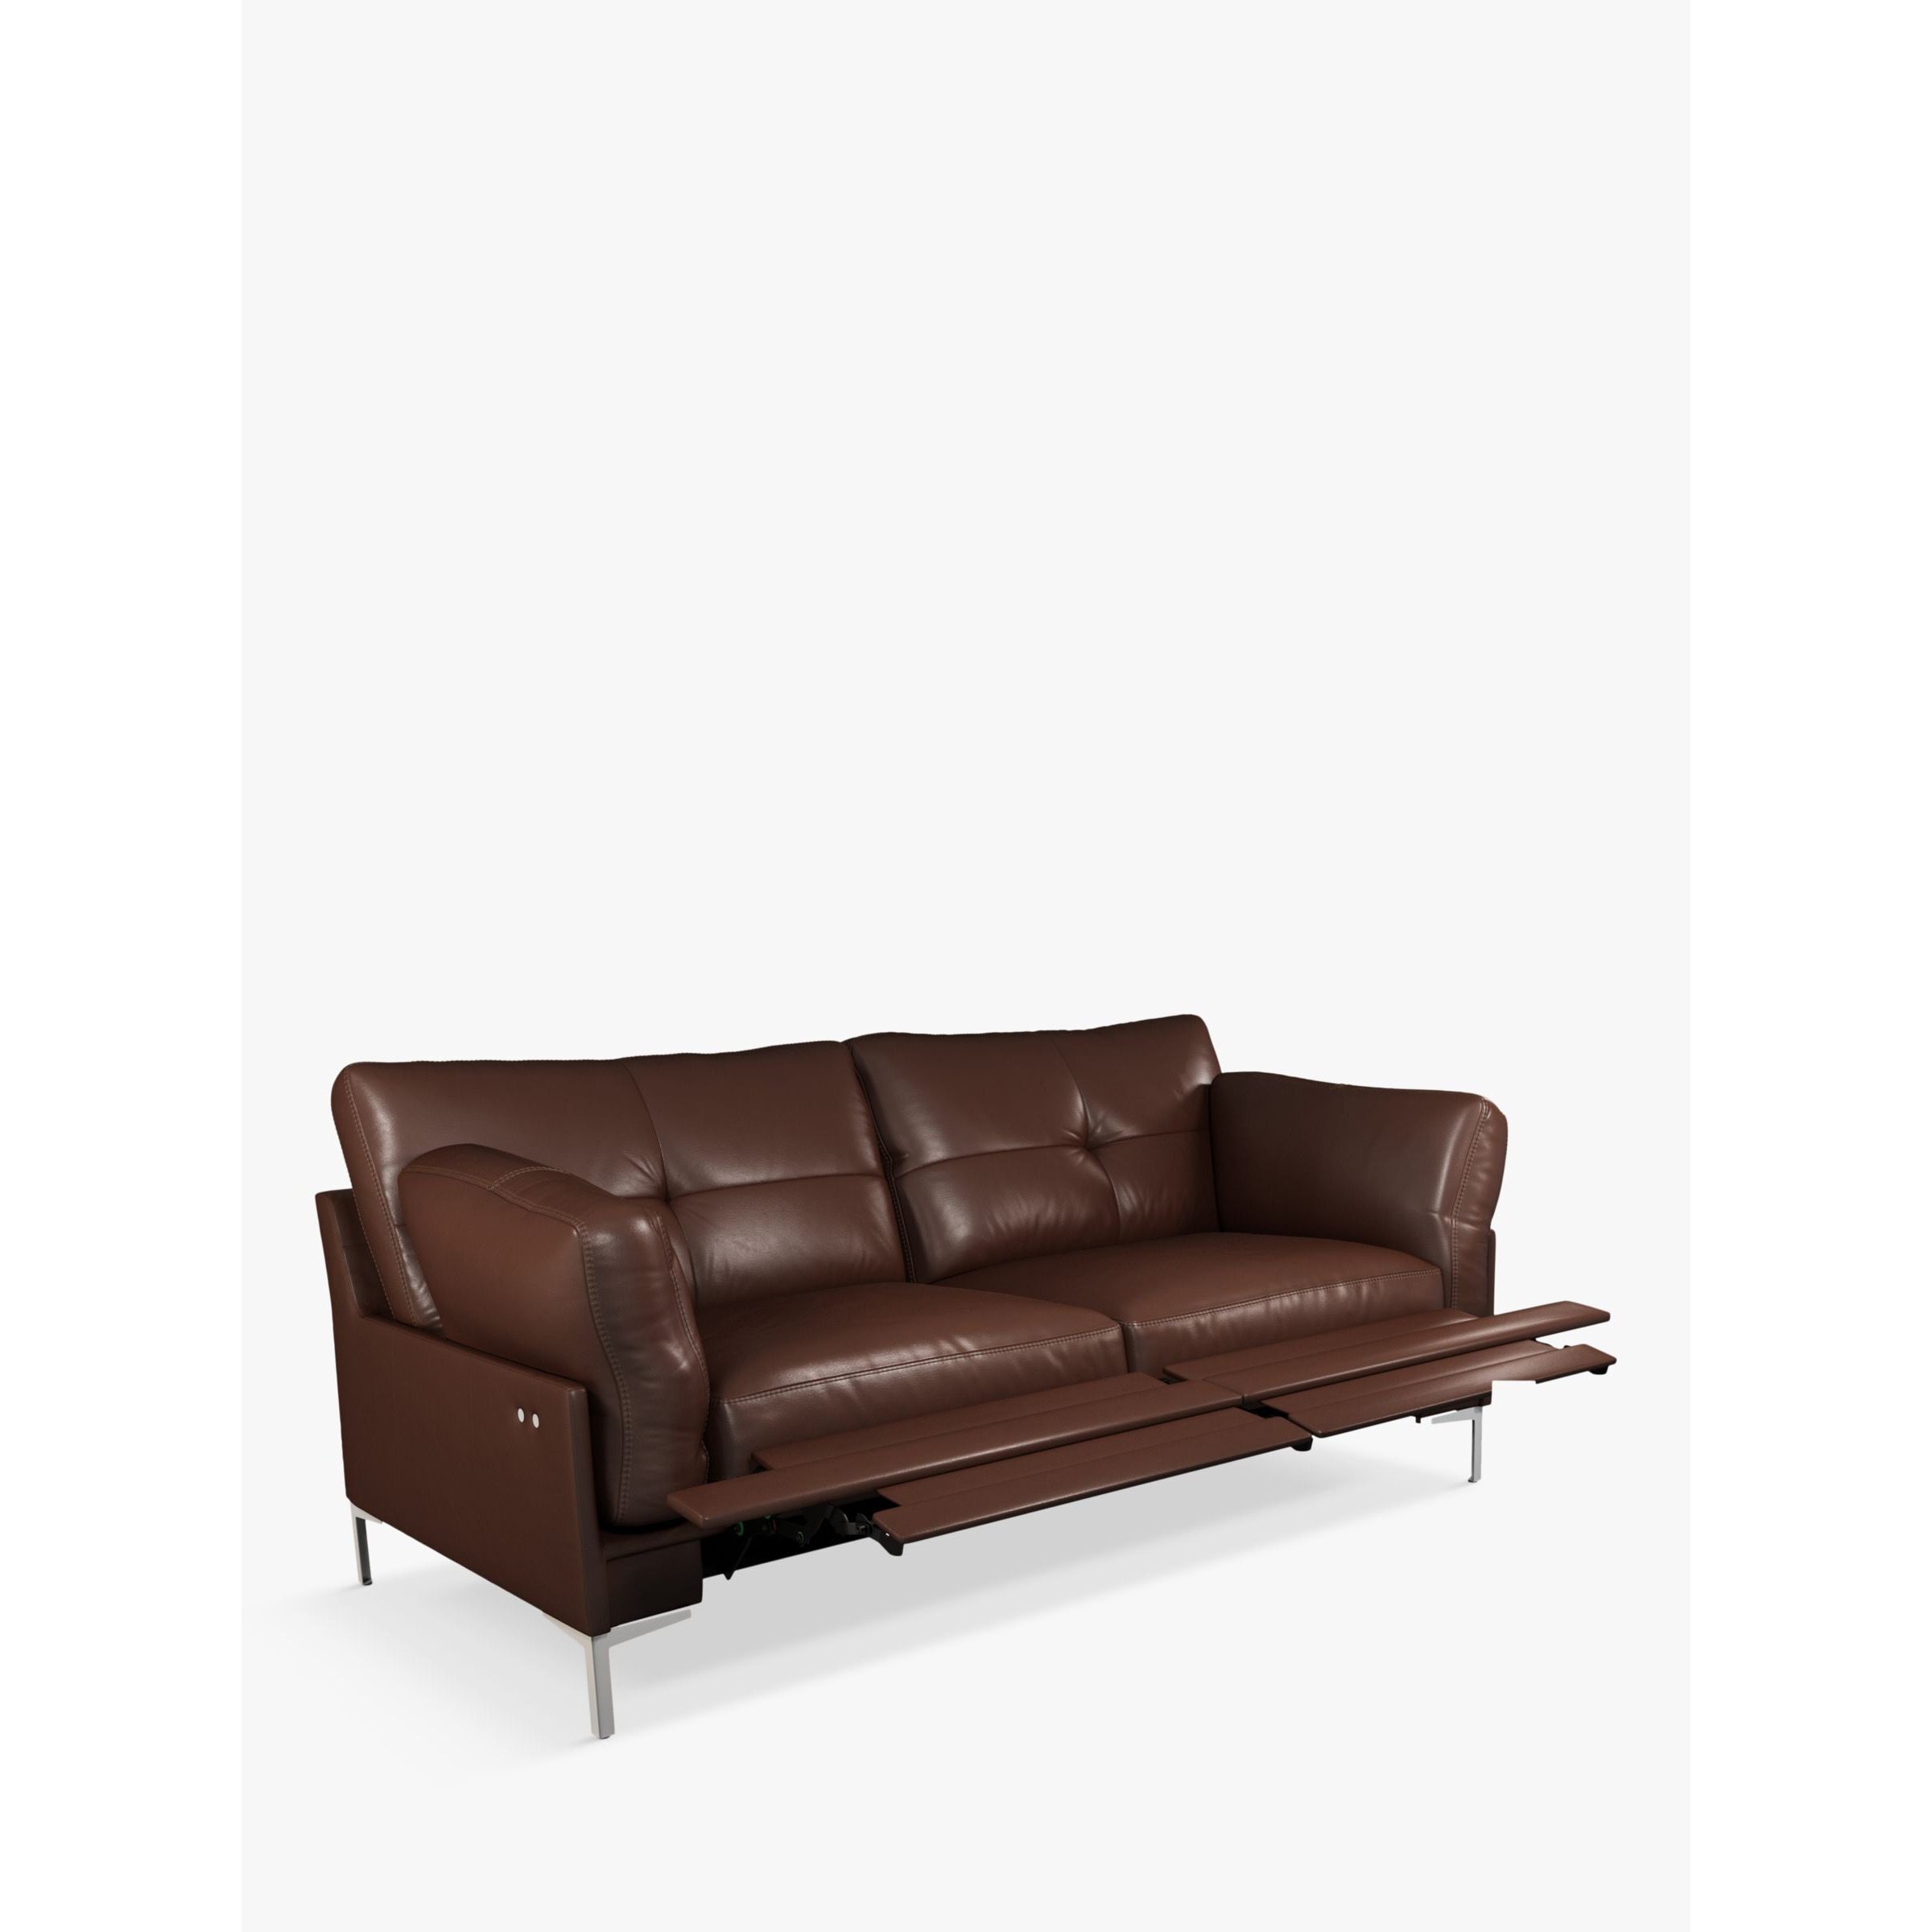 John Lewis Java II Motion Medium 2 Seater Leather Sofa with Footrest Mechanism, Metal Leg - image 1